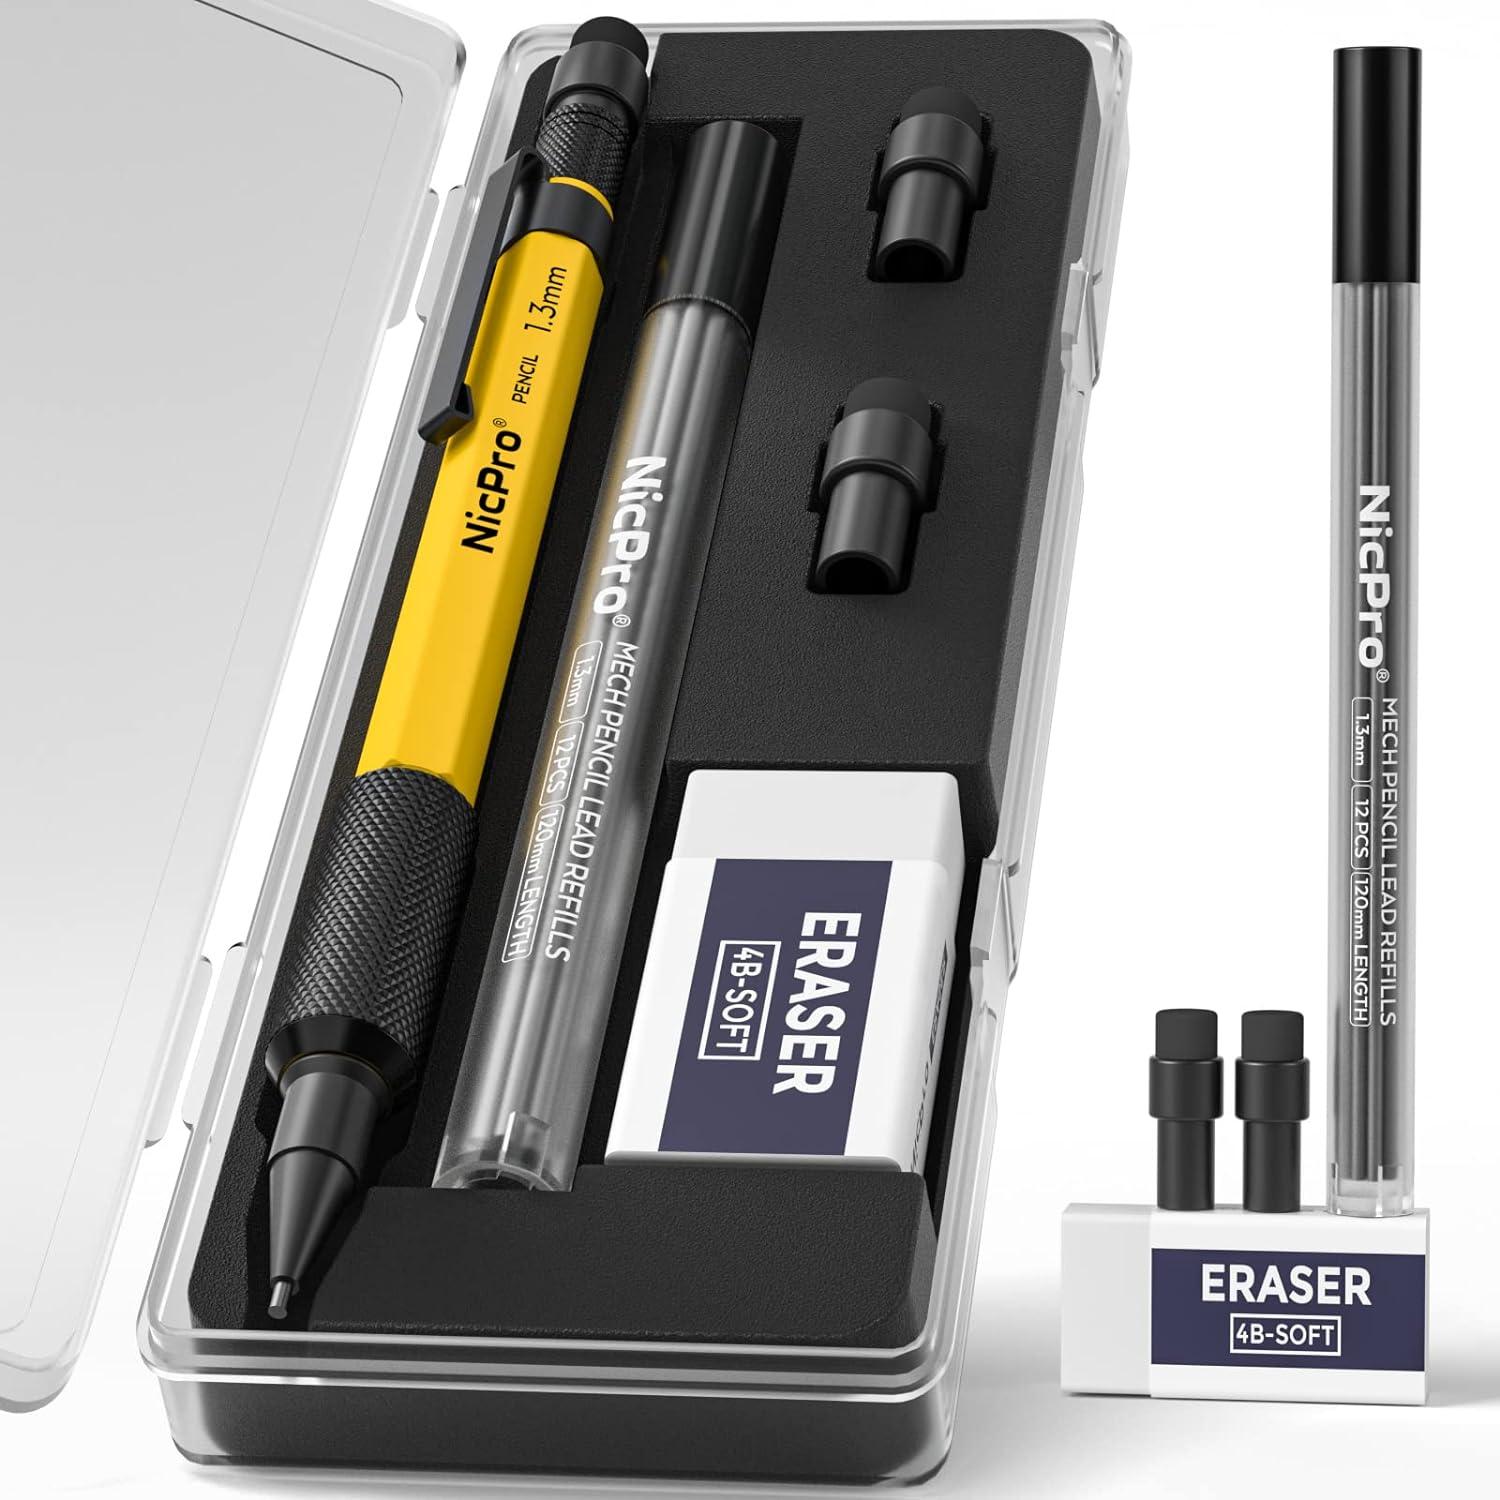 nipro 1 3 mm mechanical pencil with lead refill eraser - weatherproof heavy duty barrel  nipro b0b3xfgt3l